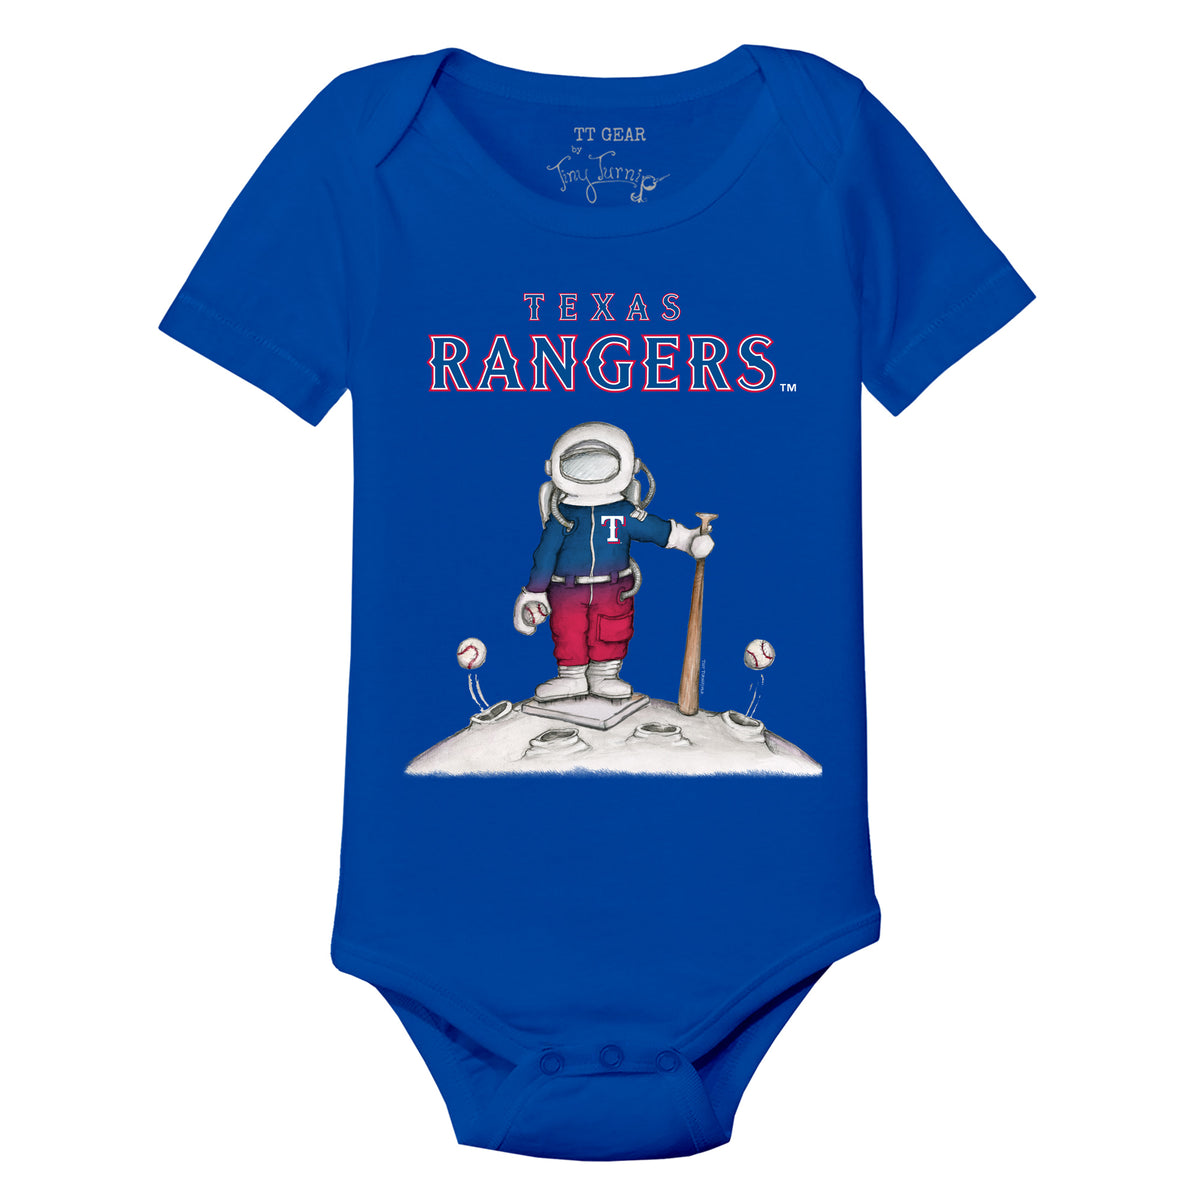 Lids Texas Rangers Tiny Turnip Youth Stacked T-Shirt - White